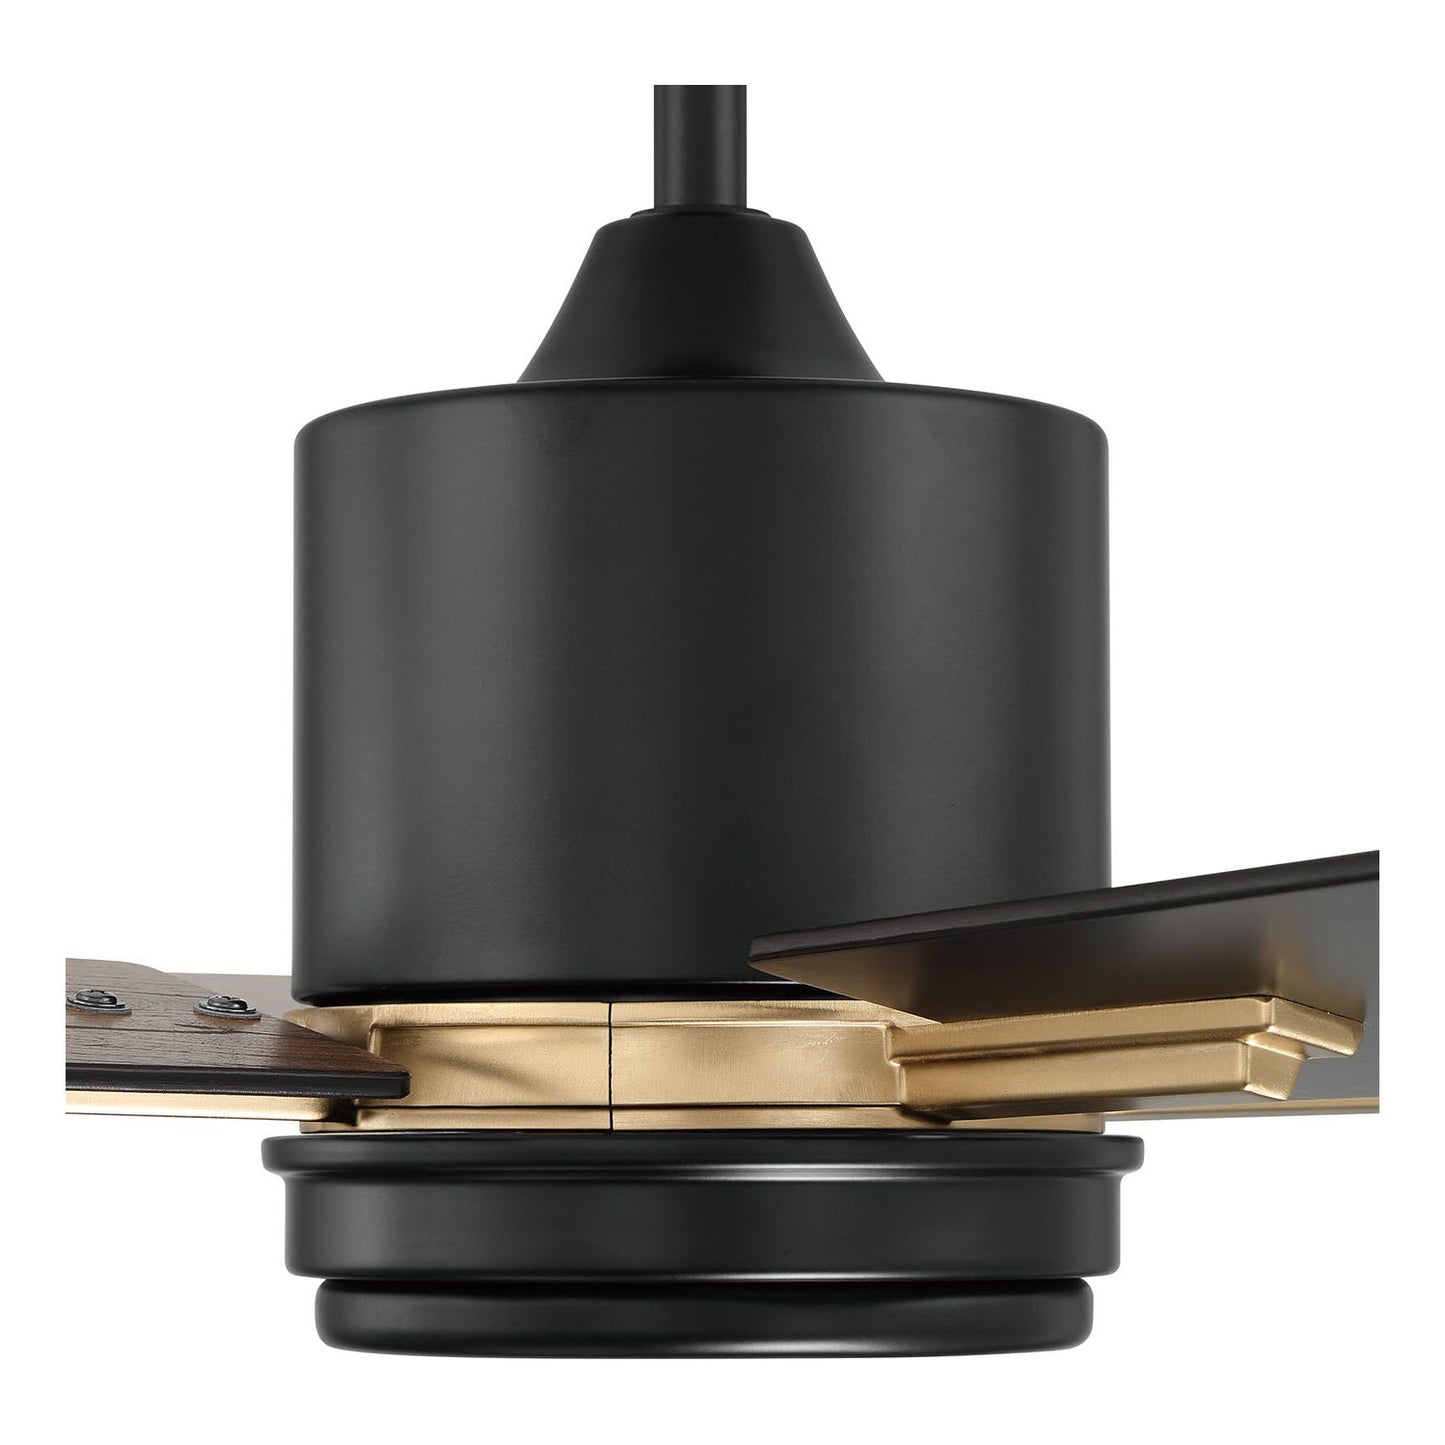 TEA52FBSB4 - Teana 52" 4 Blade Ceiling Fan with Light Kit - Wall Control - Flat Black / Satin Brass